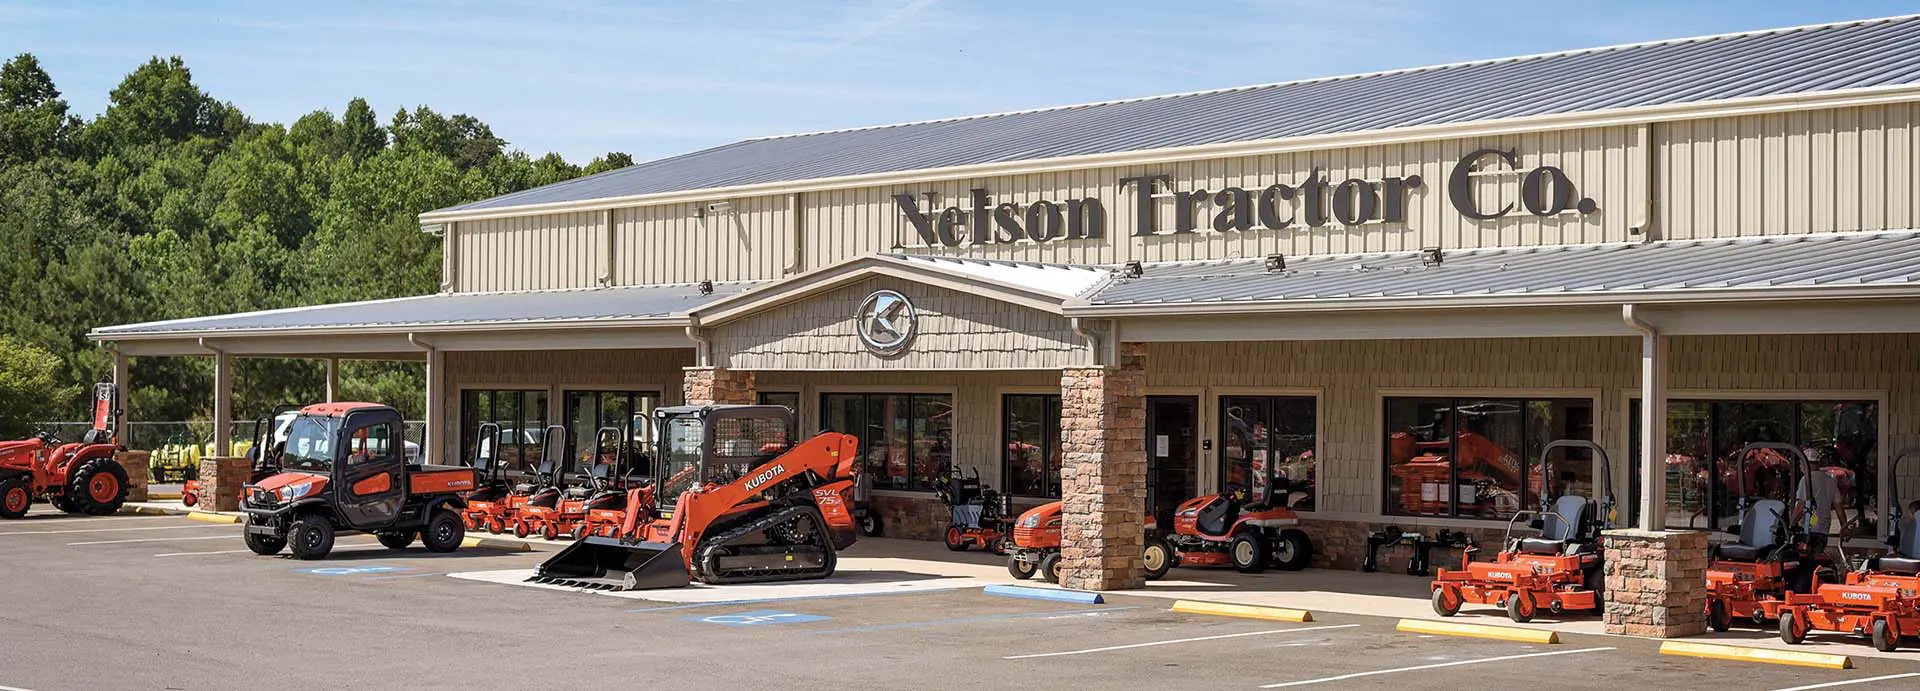 Nelson Tractor Company Storefront, Jasper Georgia